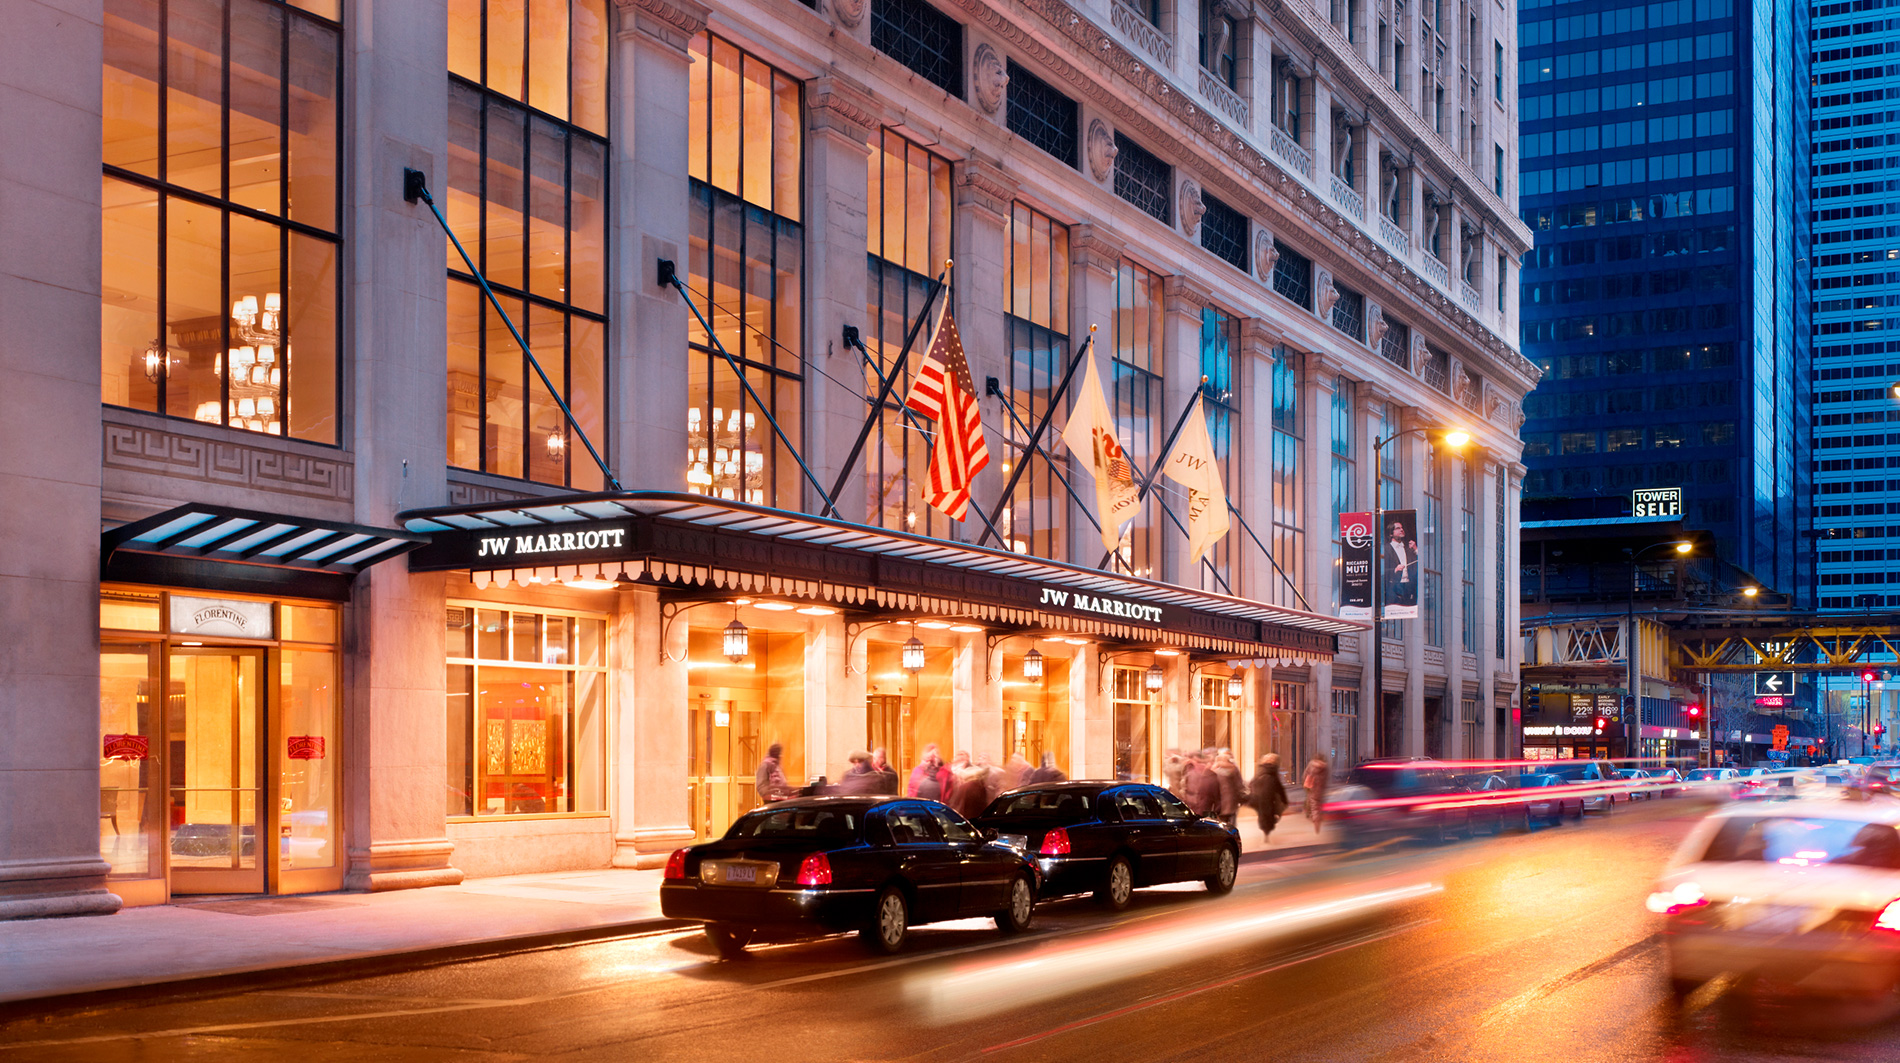 Jw Marriott Chicago Chicago Hotels Chicago United States Forbes